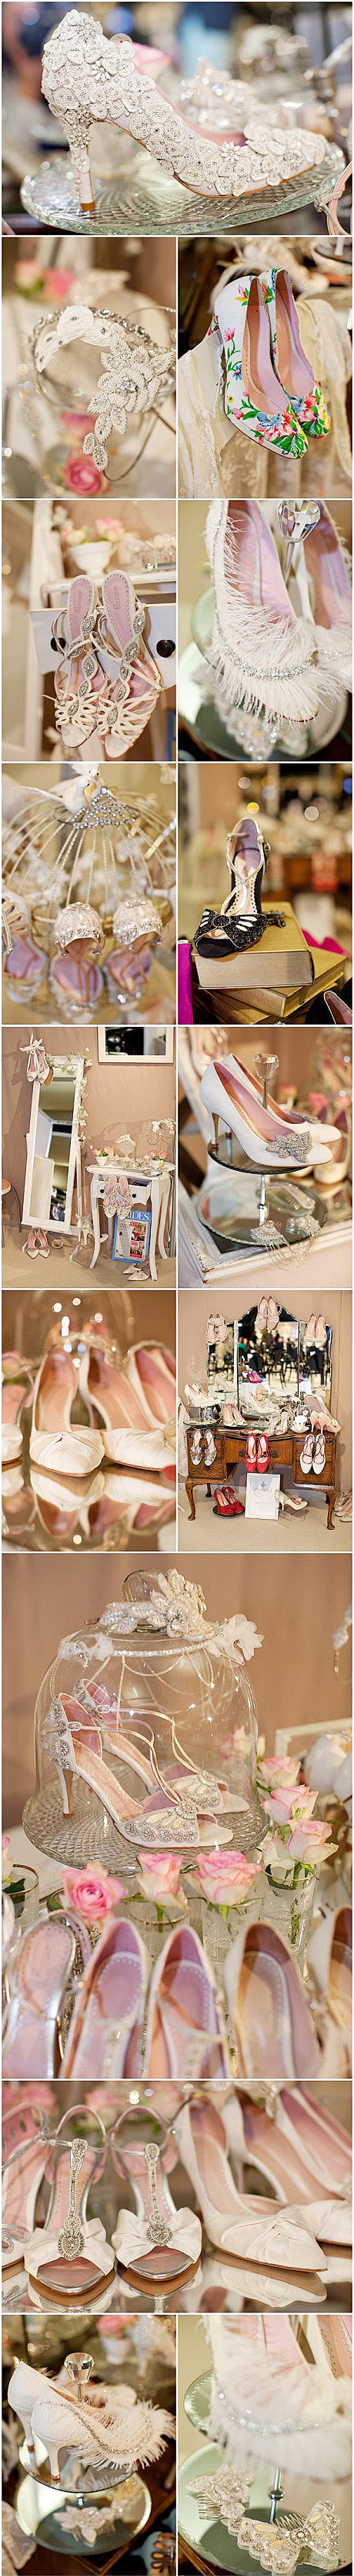 婚礼婚鞋http://www.meeth...